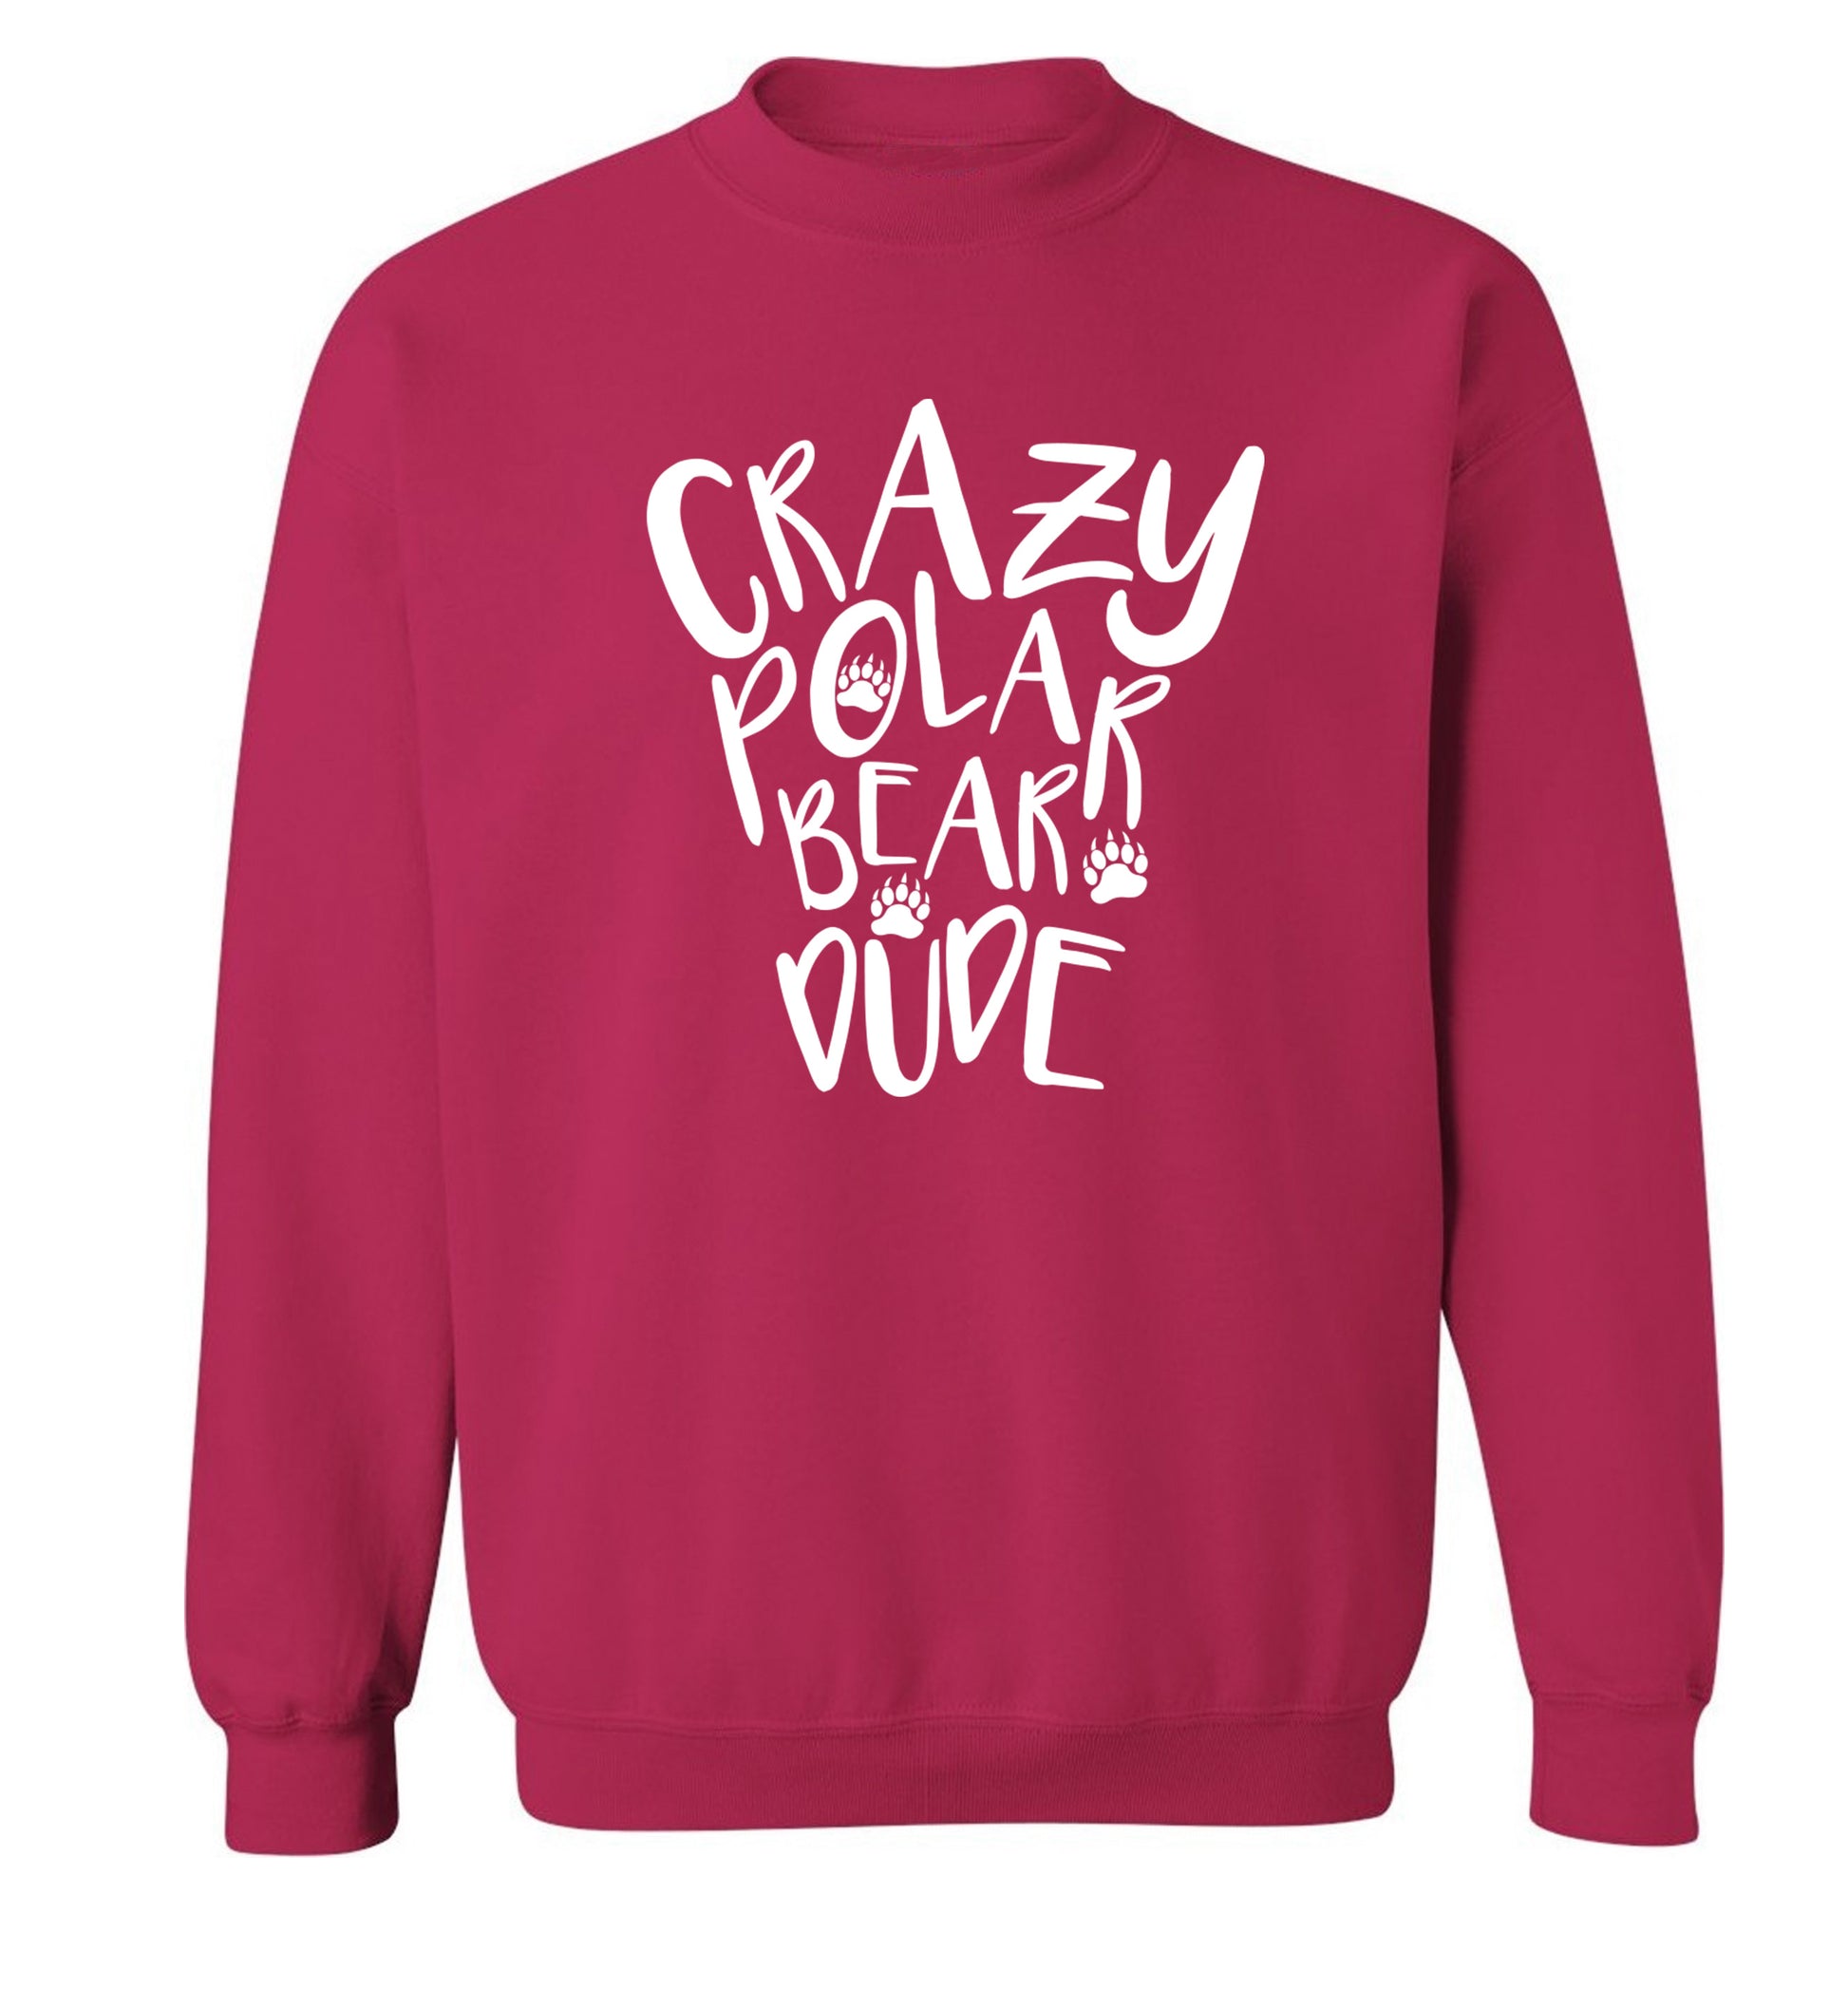 Crazy polar bear dude Adult's unisex pink Sweater 2XL